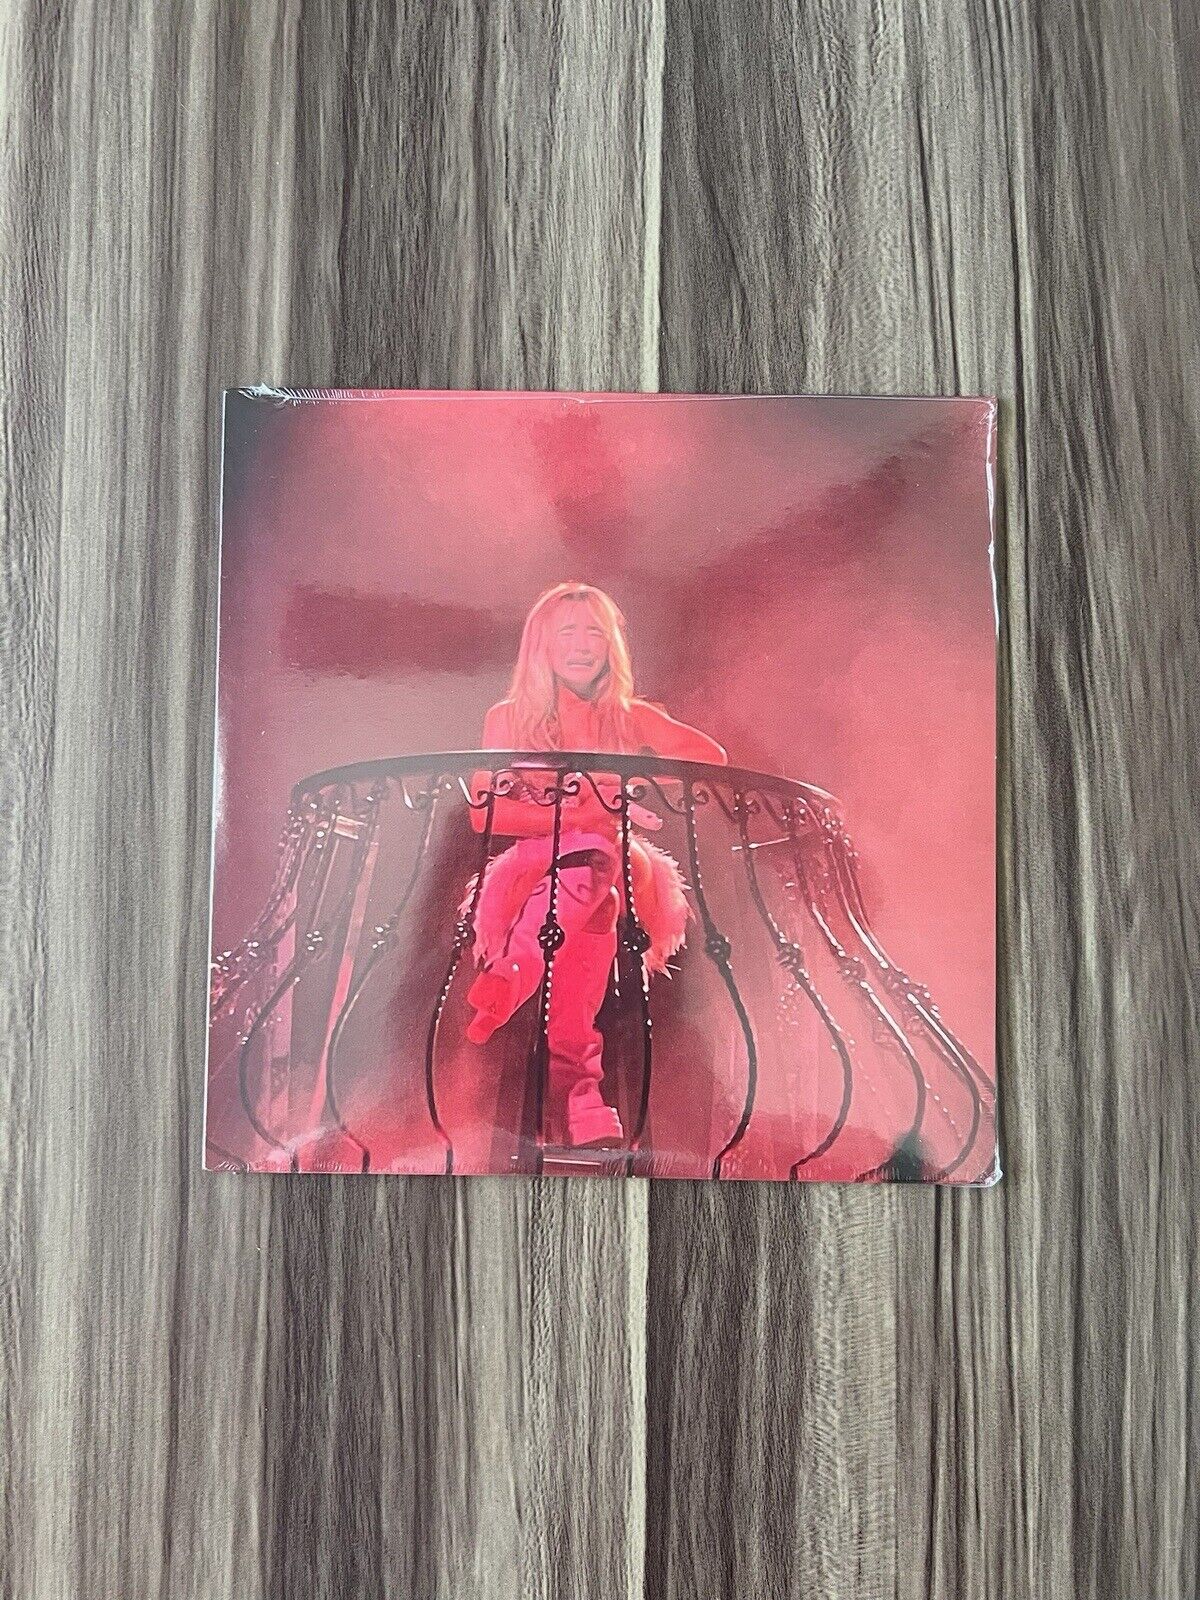 Sabrina Carpenter Feather pink glitter 7” single vinyl NEW SEALED SAME DAY SHIP